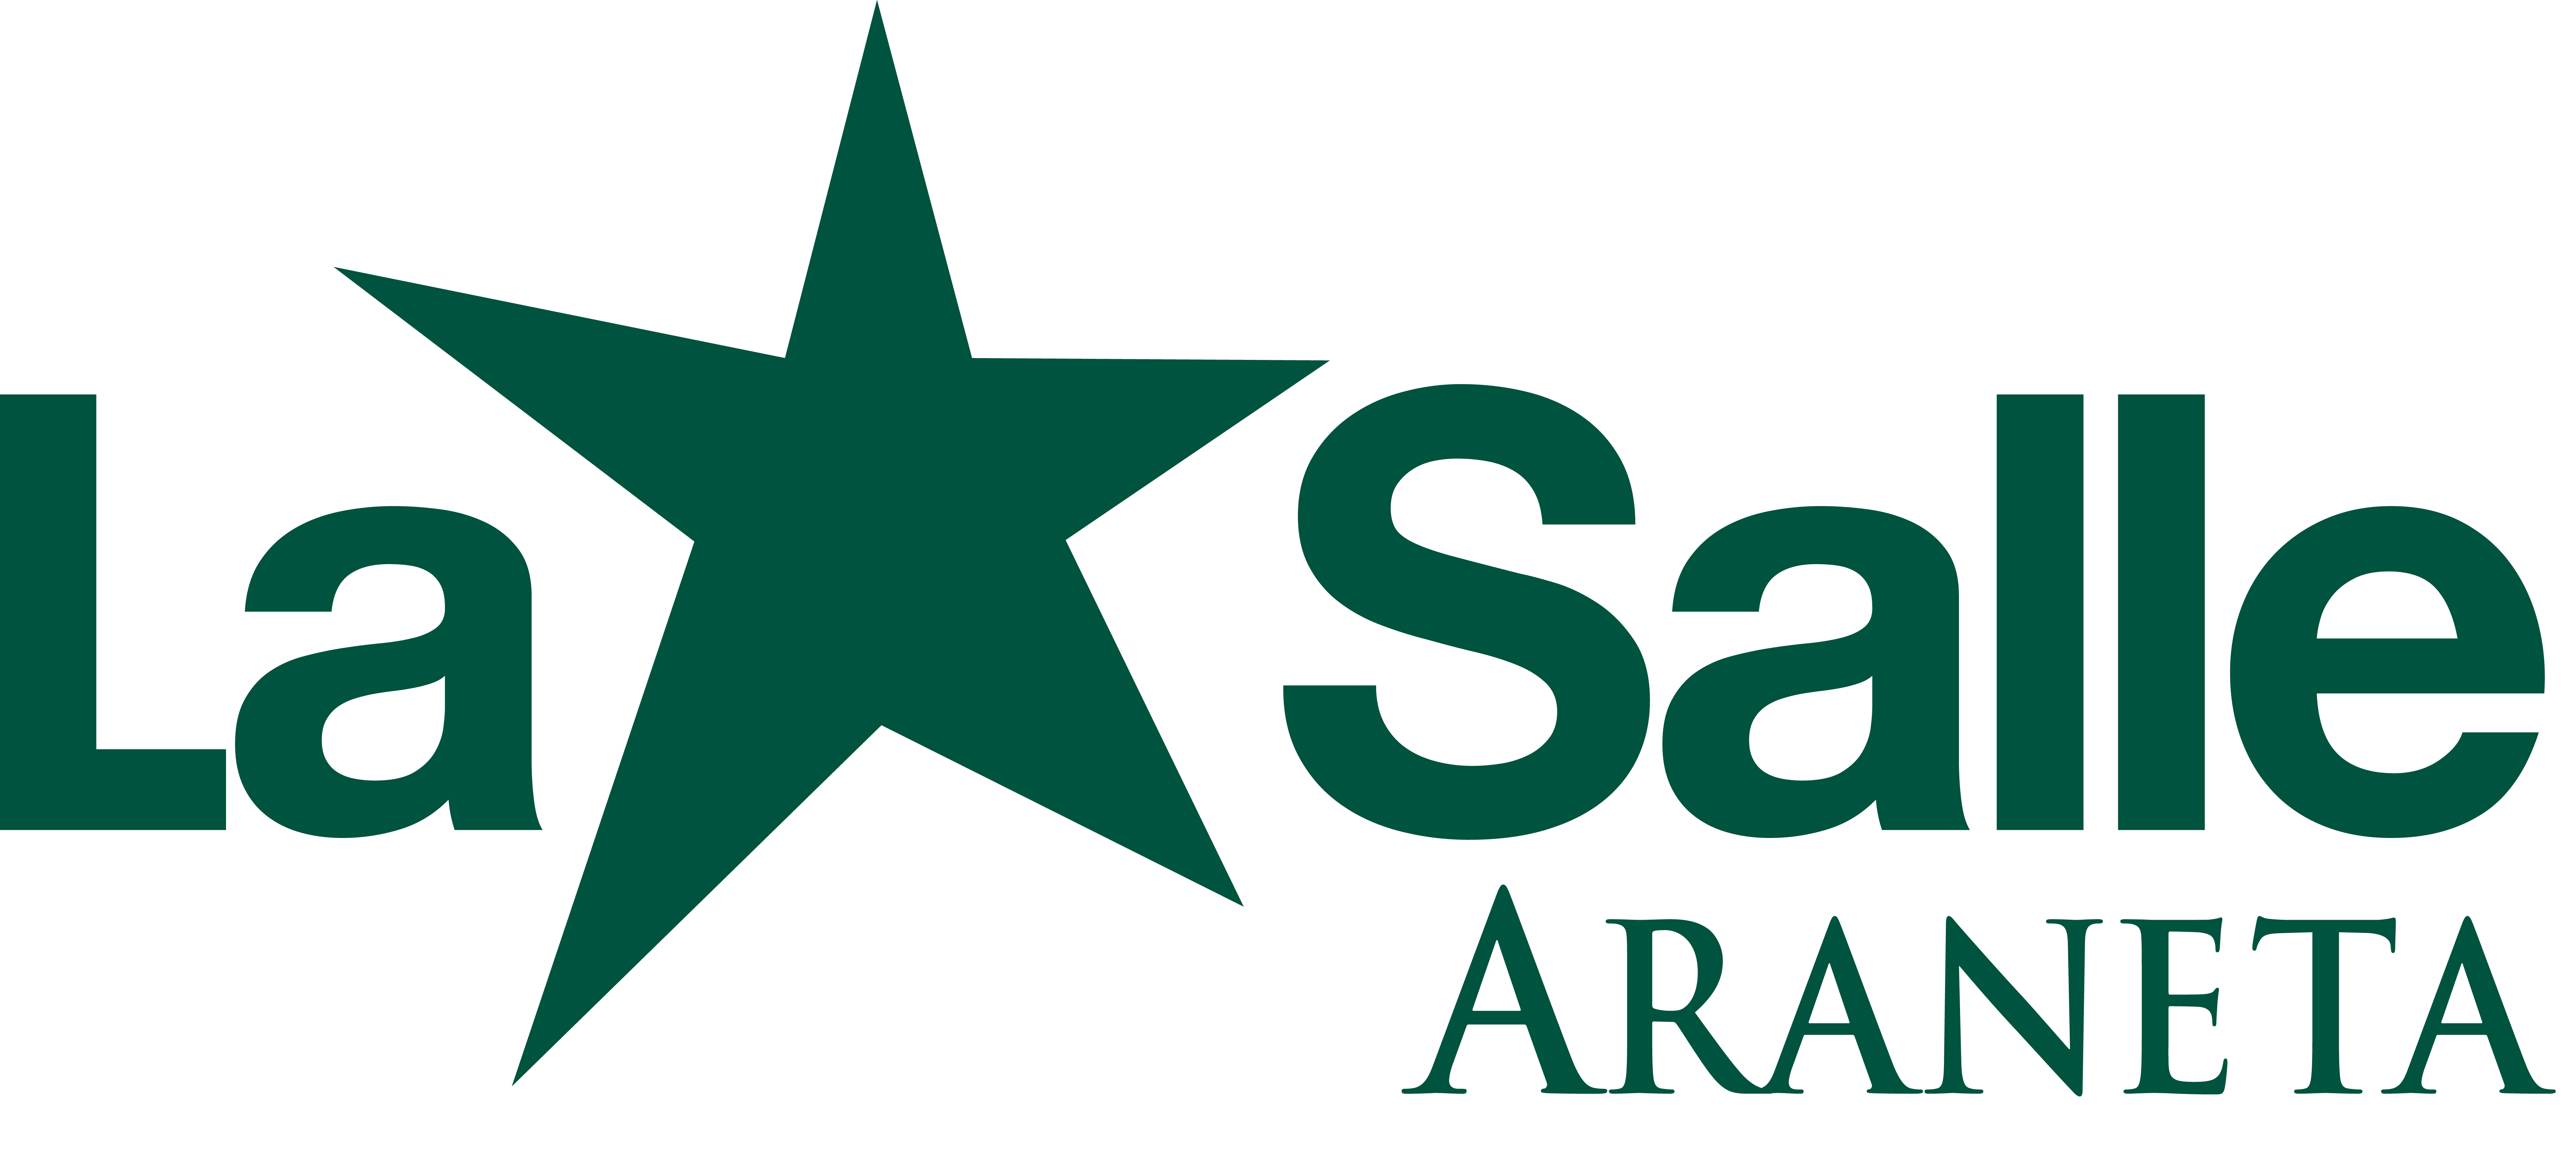 Green Corporate Logo - De La Salle Araneta Website | Brandguide